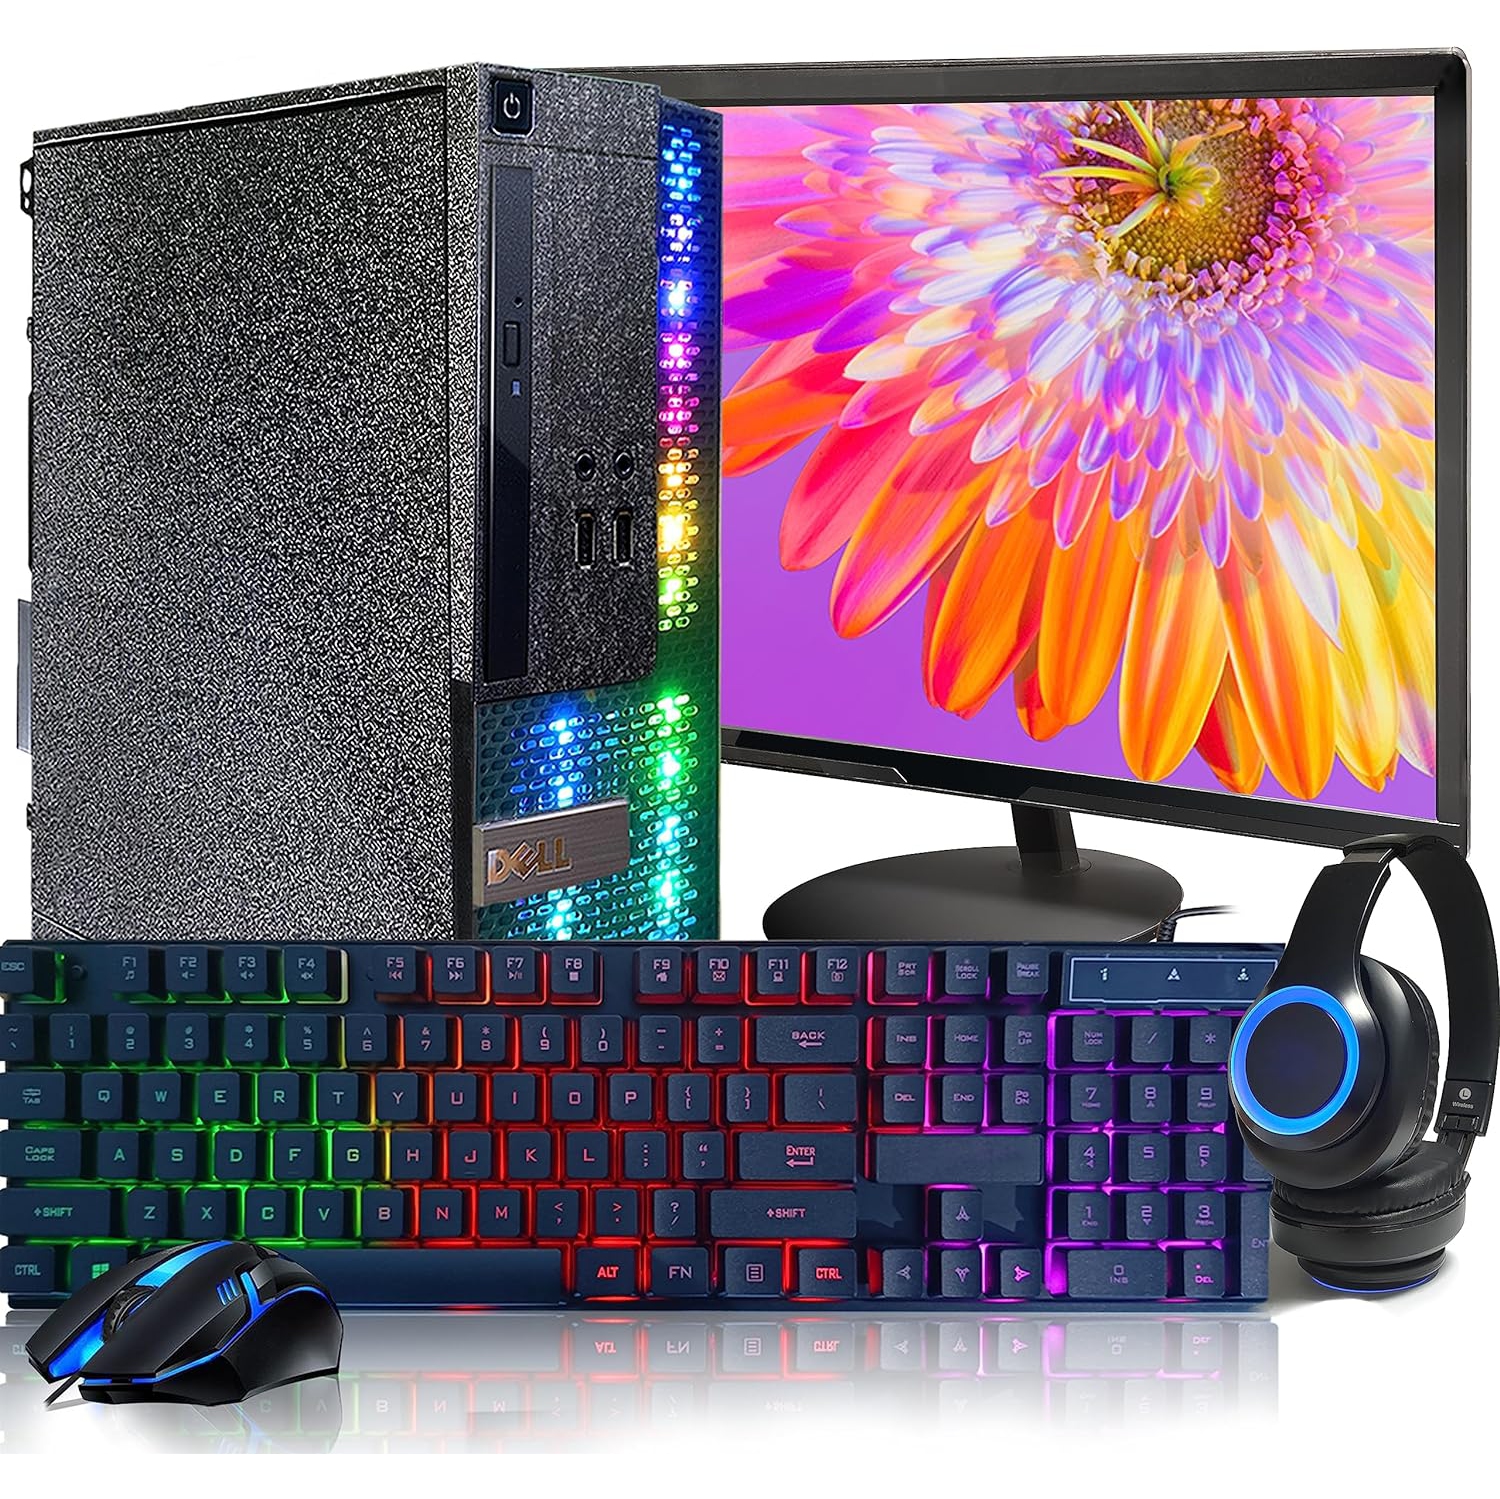 Dell RGB Gaming Desktop Computer, Intel Core I7 up to 3.8G, GTX 750 Ti 4G, 16G, 512G SSD, WiFi, BT, RGB KB & MS, New 22" 1080 FHD LED, RGB Headphone, W10P64 -Refurbished Excellent